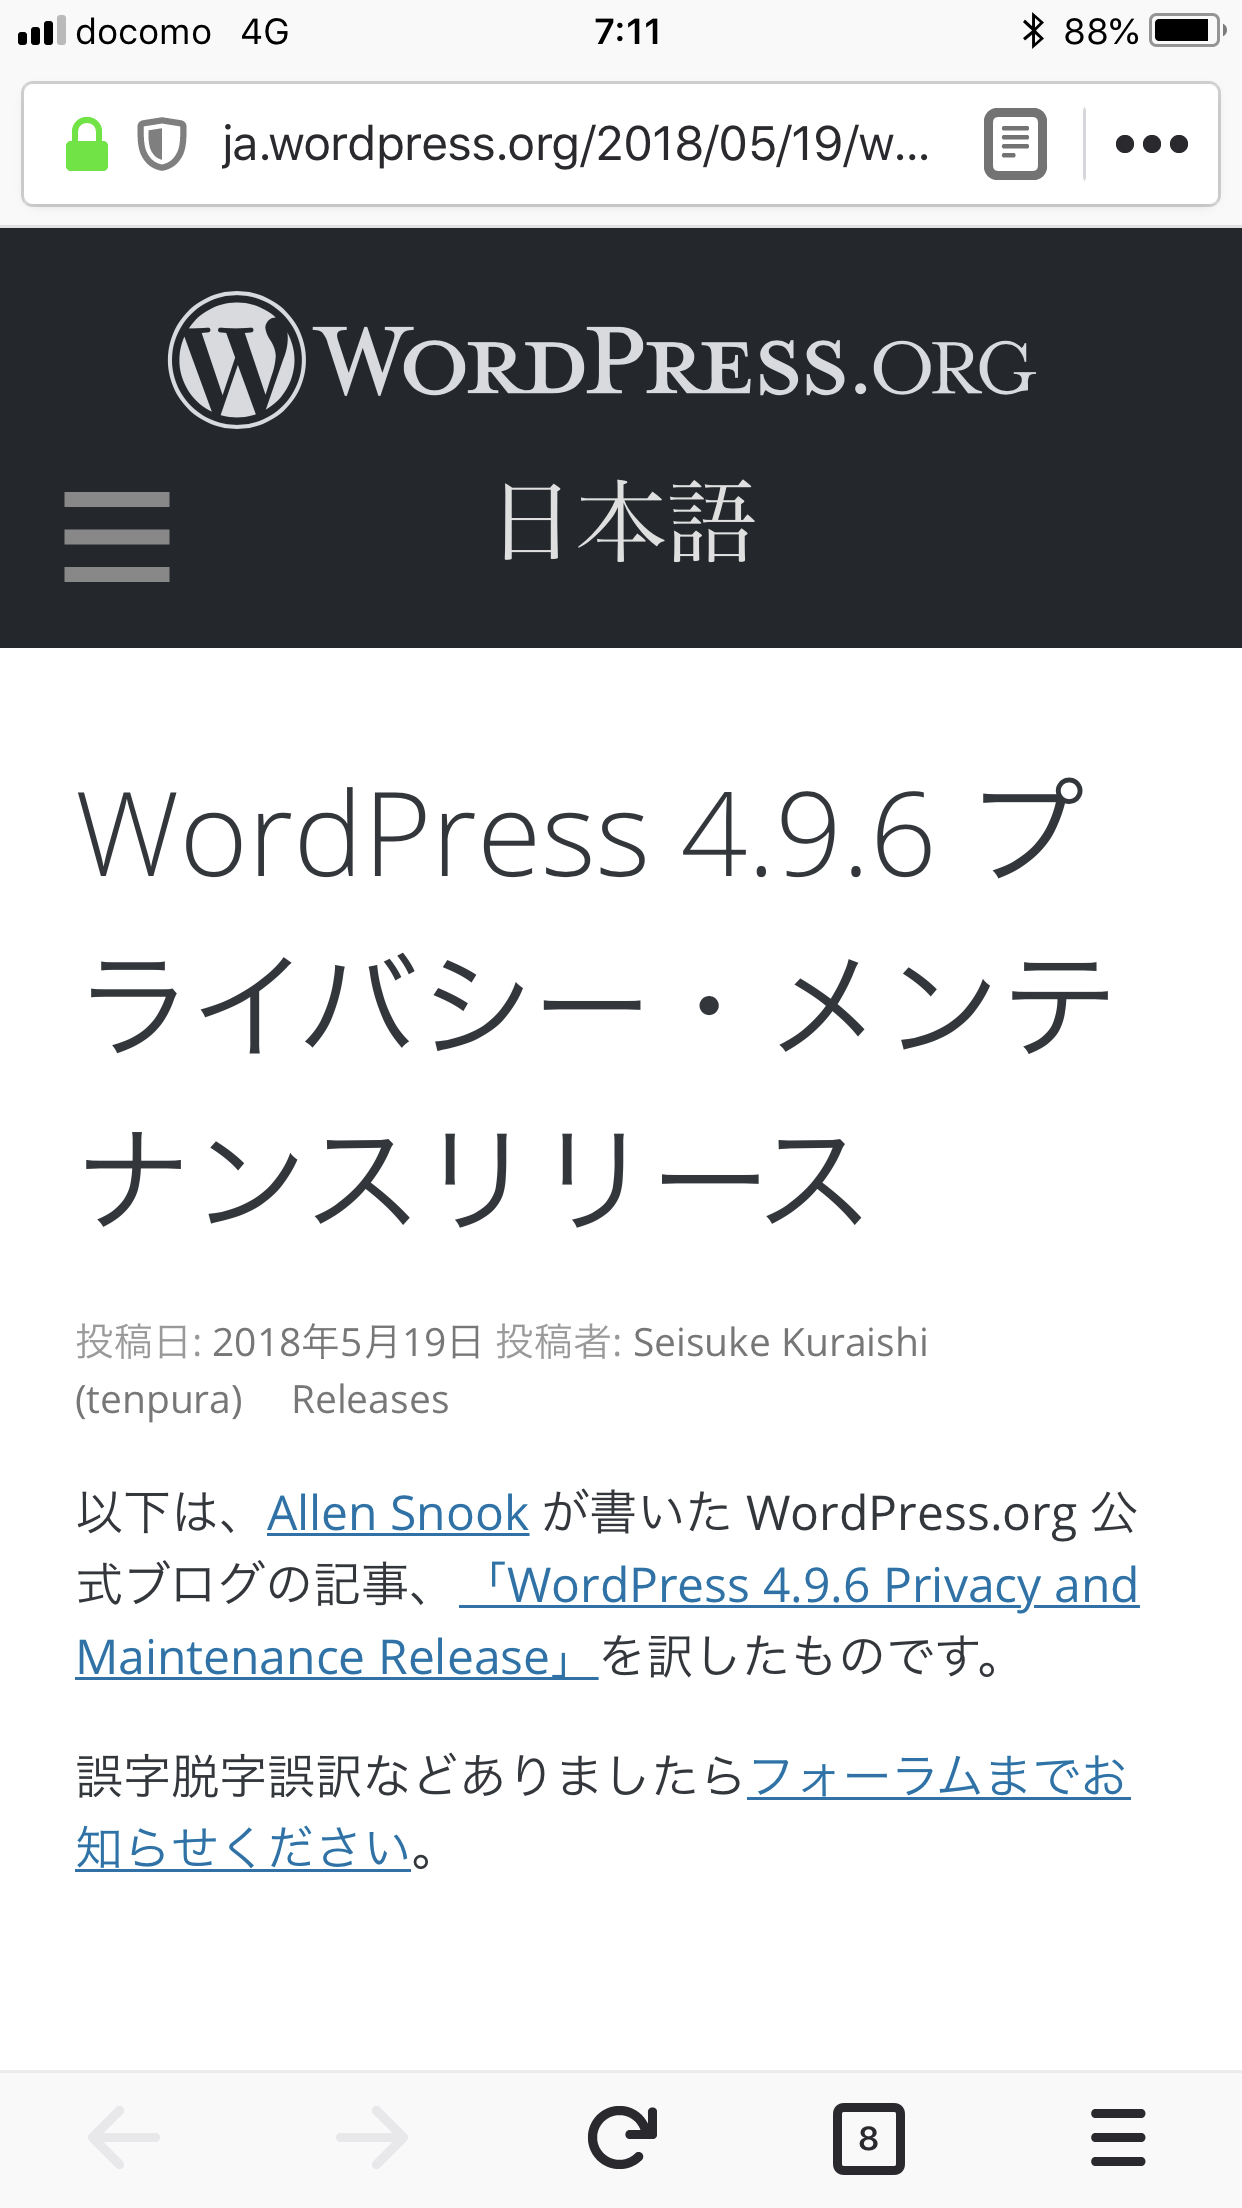 WordPress 4.9.6